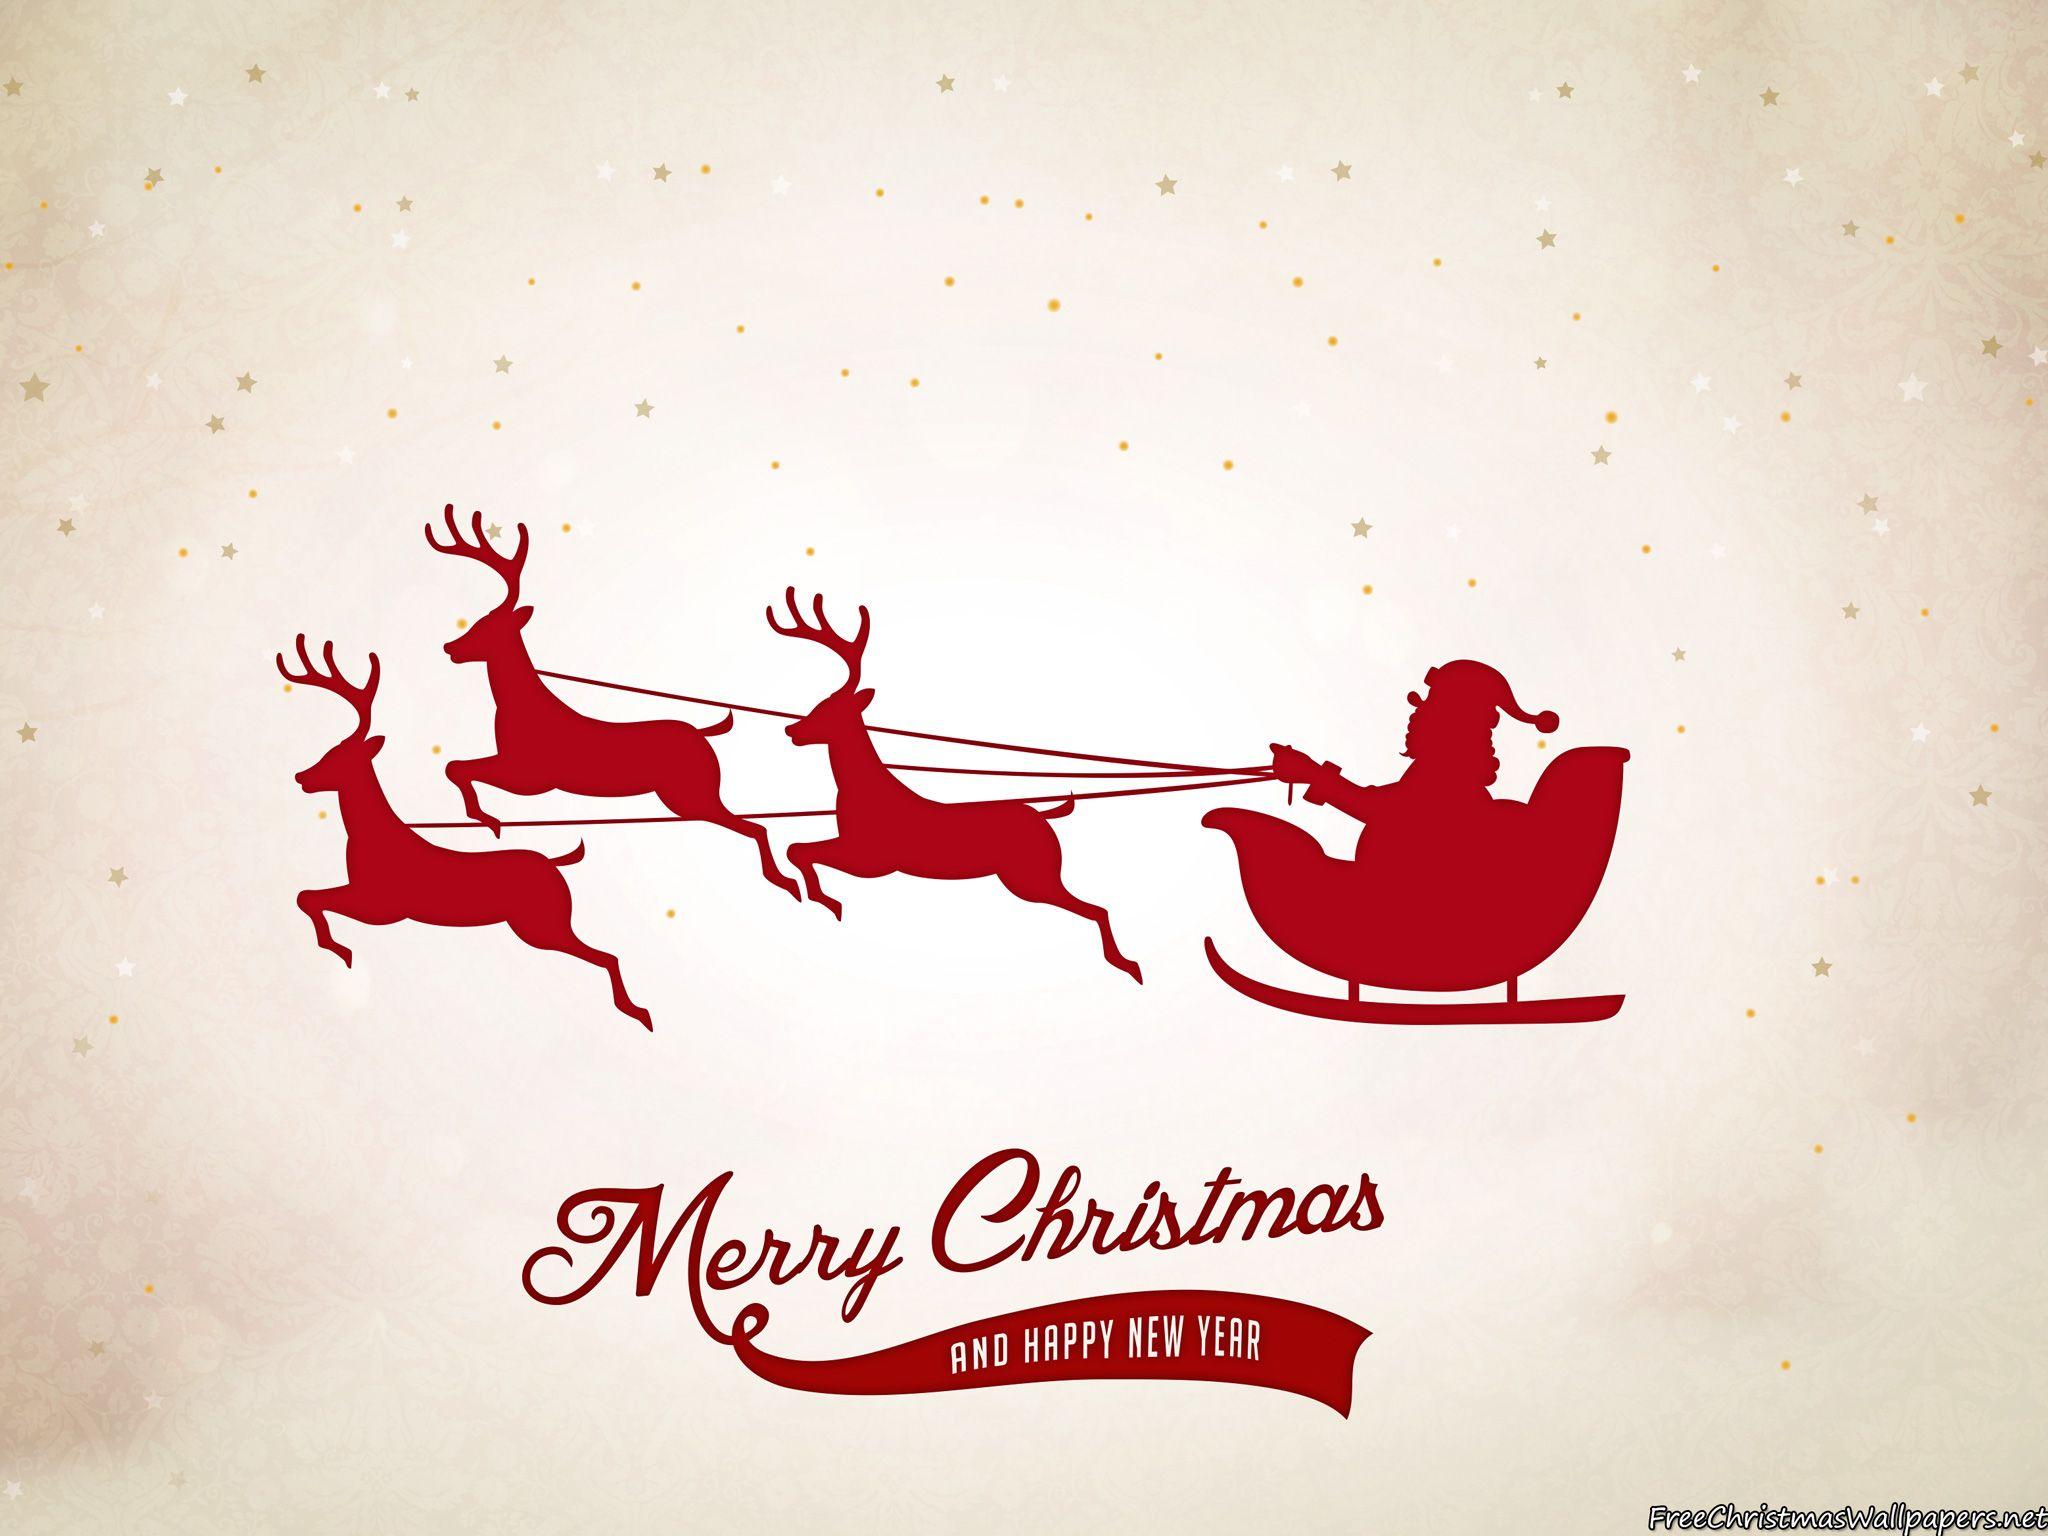 Santa Sleigh Ride. Santa sleigh, Merry christmas, happy new